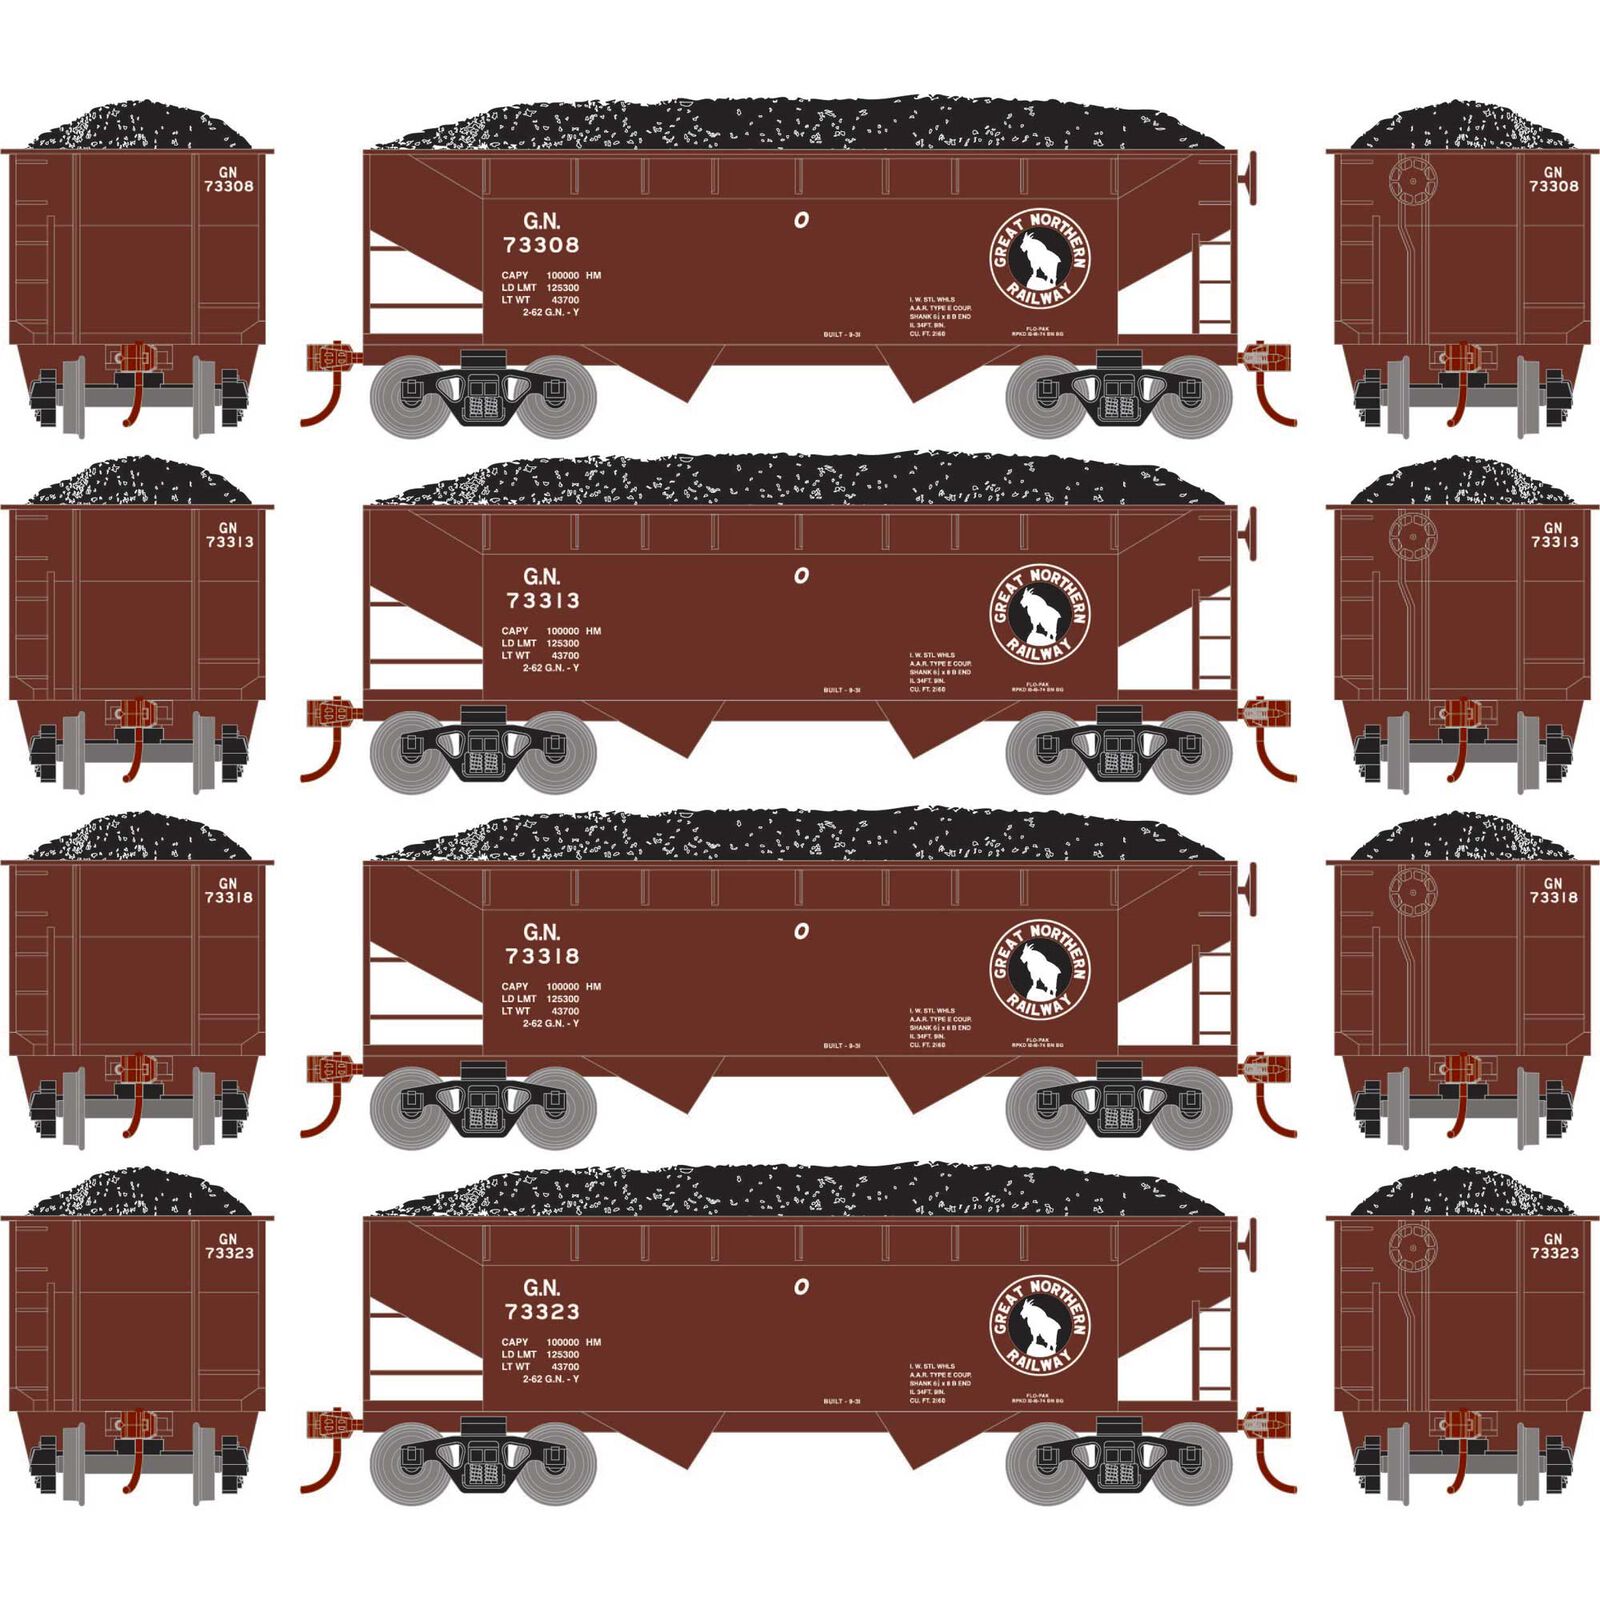 HO 34' 2-Bay Offset Hopper with Coal Load, GN #73308 / 73313 / 73318 / 73323 (4)